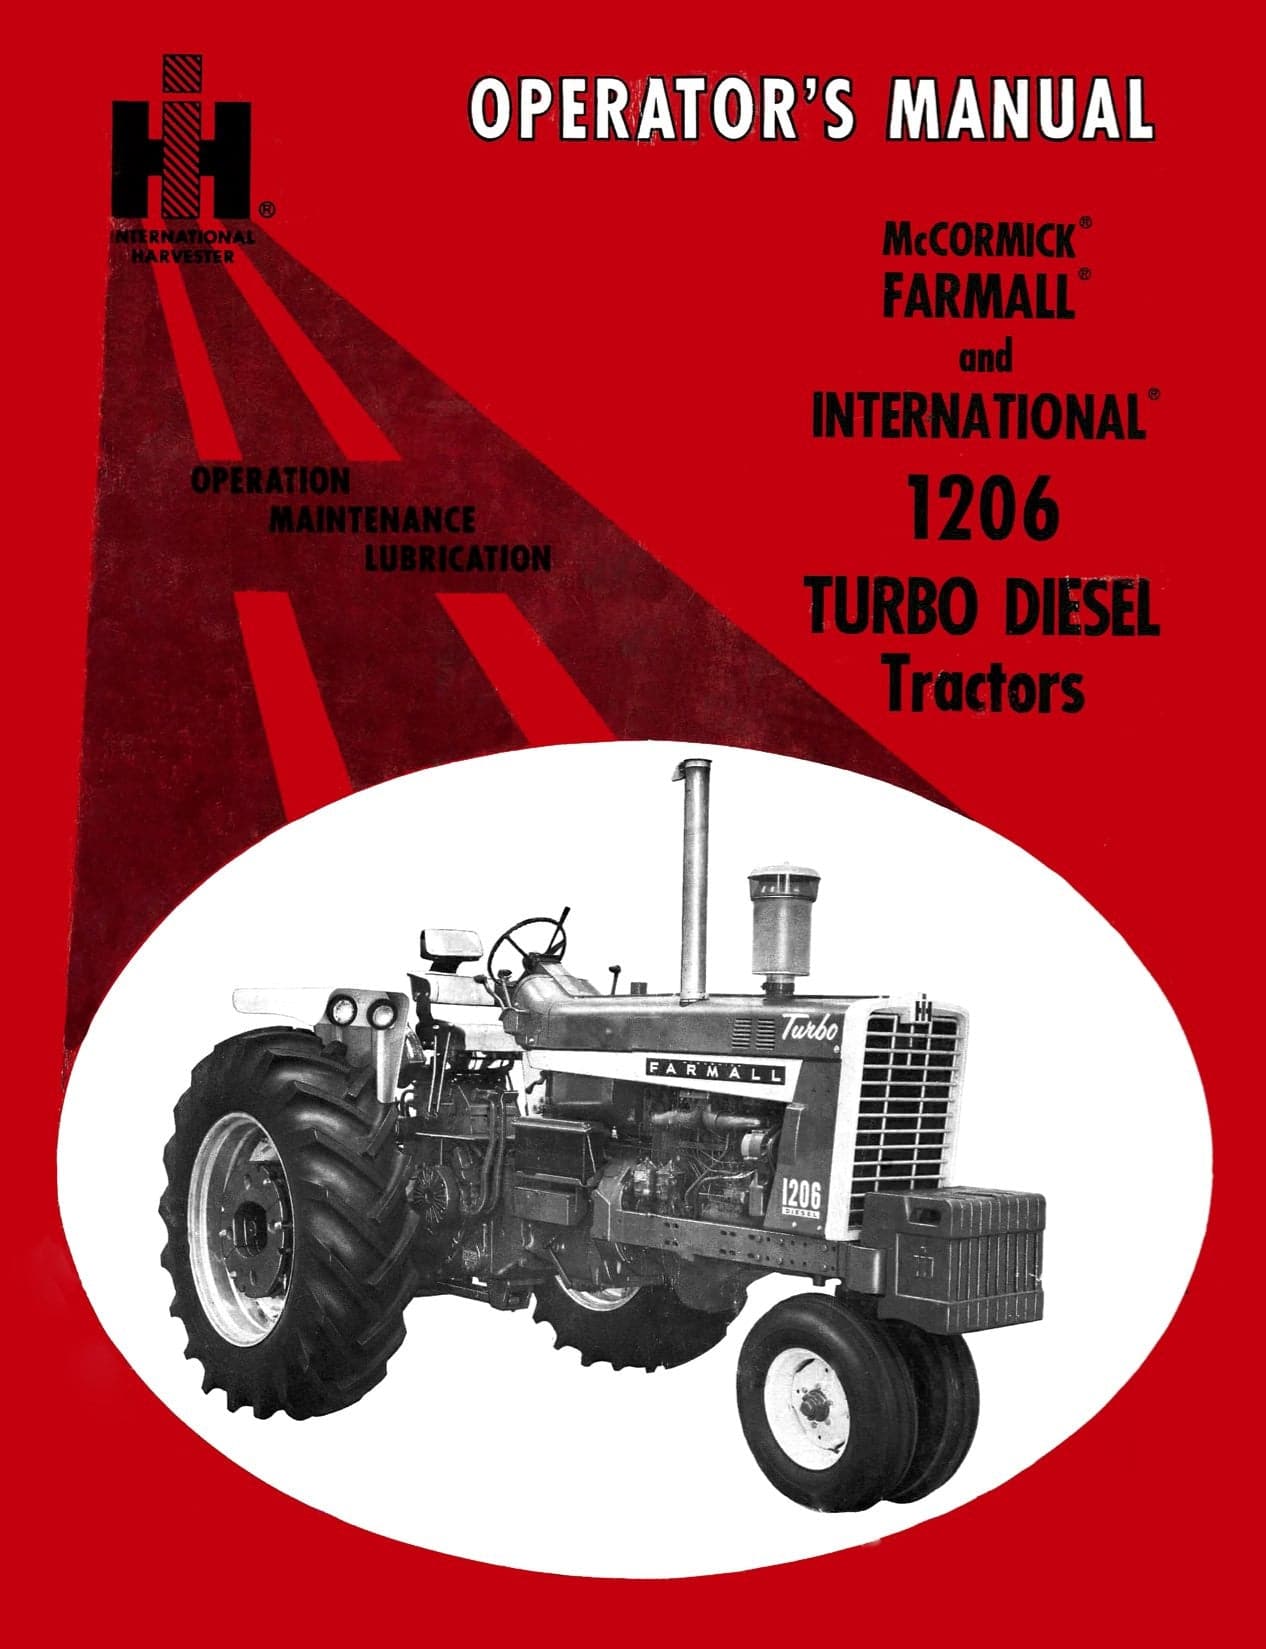 McCormick Farmall and International 1206 Turbo Diesel Tractors  - Operator's Manual - Ag Manuals - A Provider of Digital Farm Manuals - 1